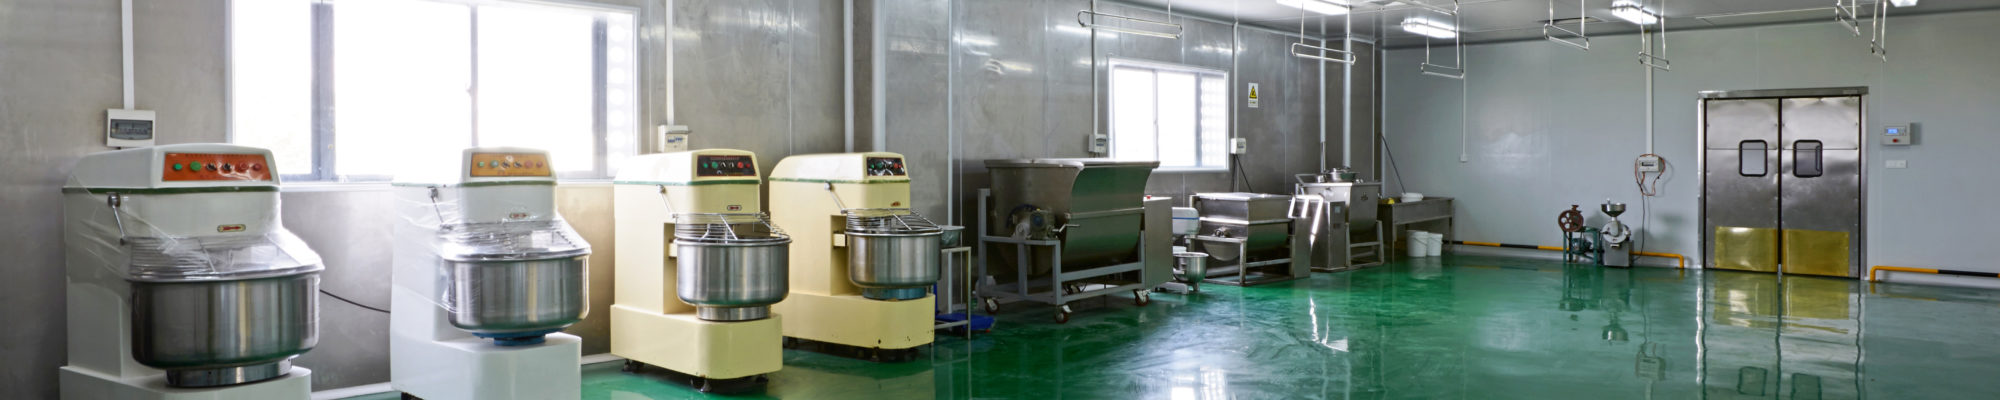 3mm Polyurethane food mixing room